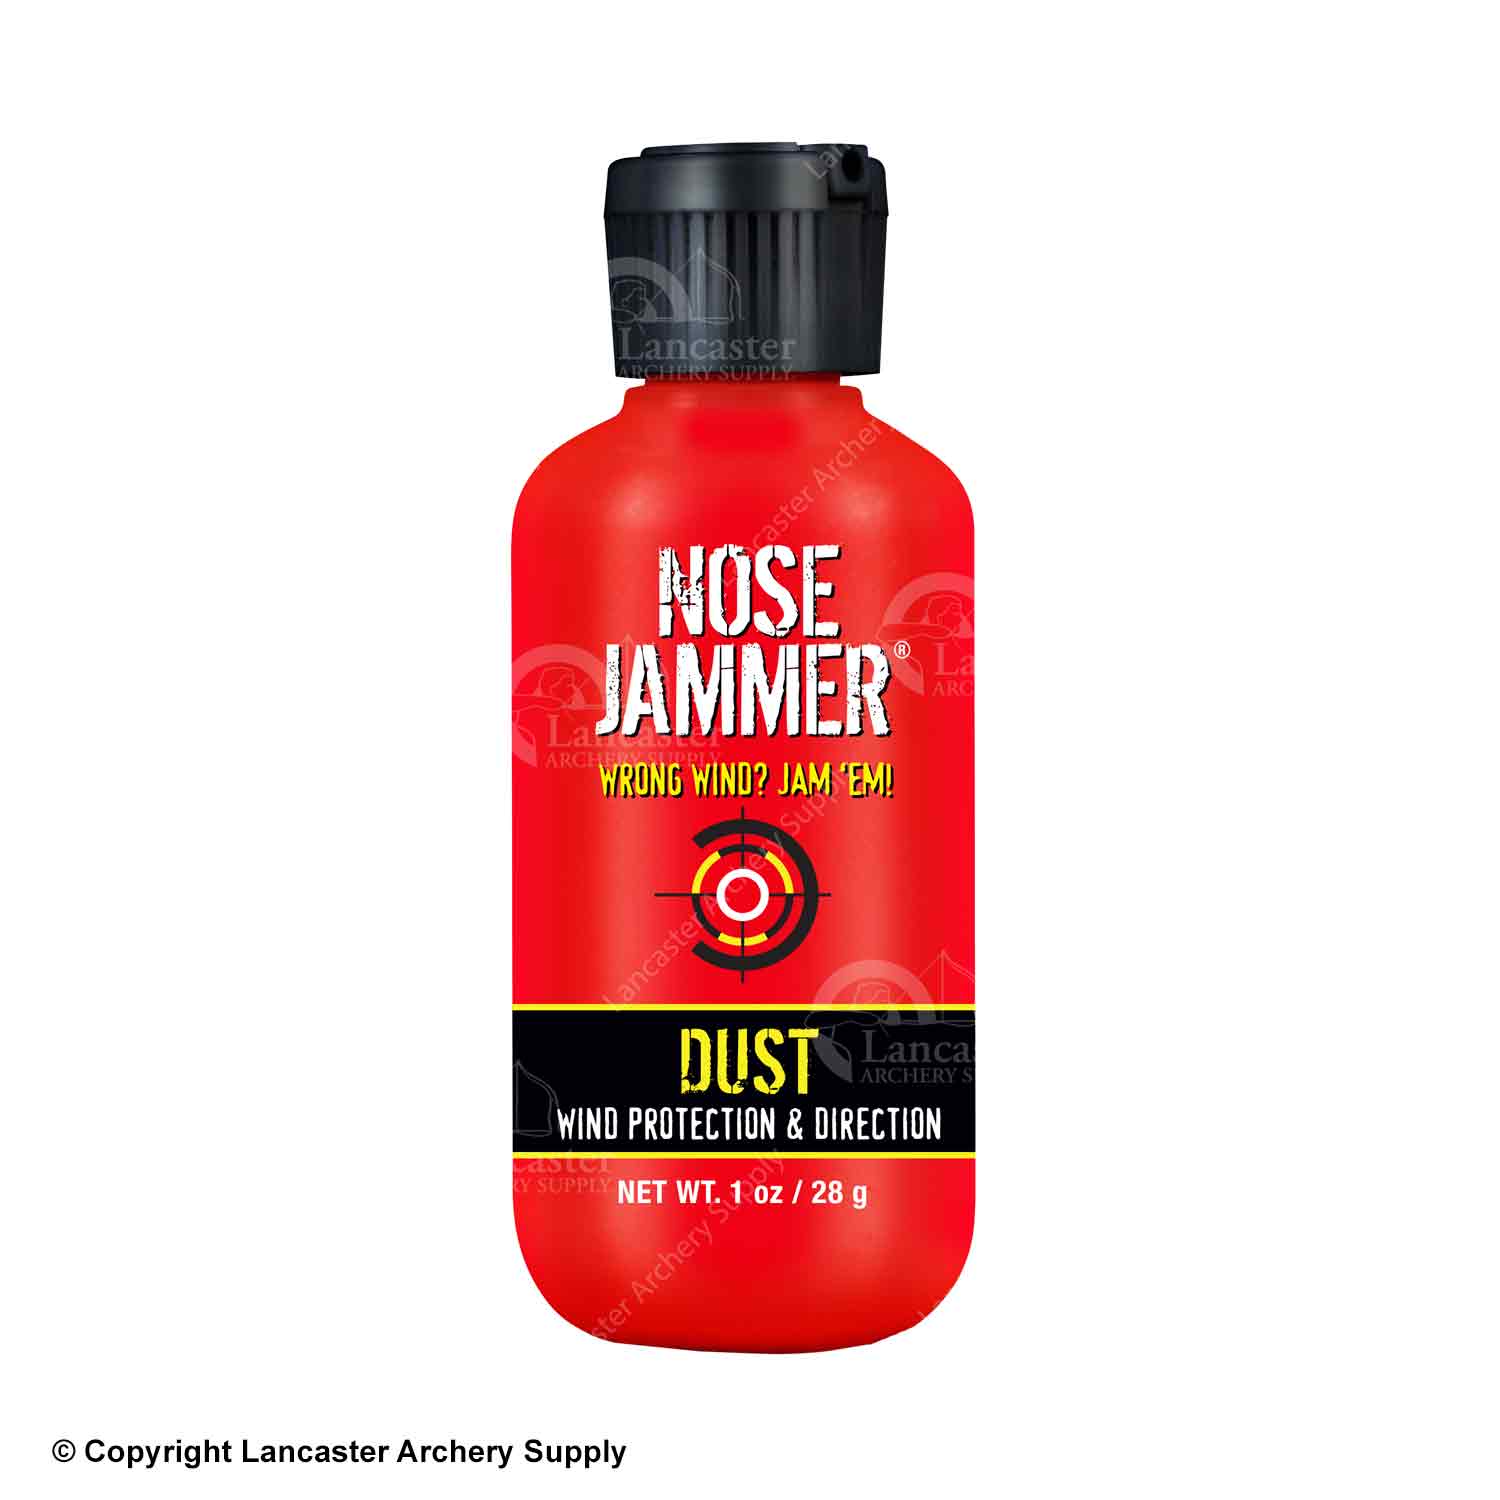 Nose Jammer Dust (1 oz)